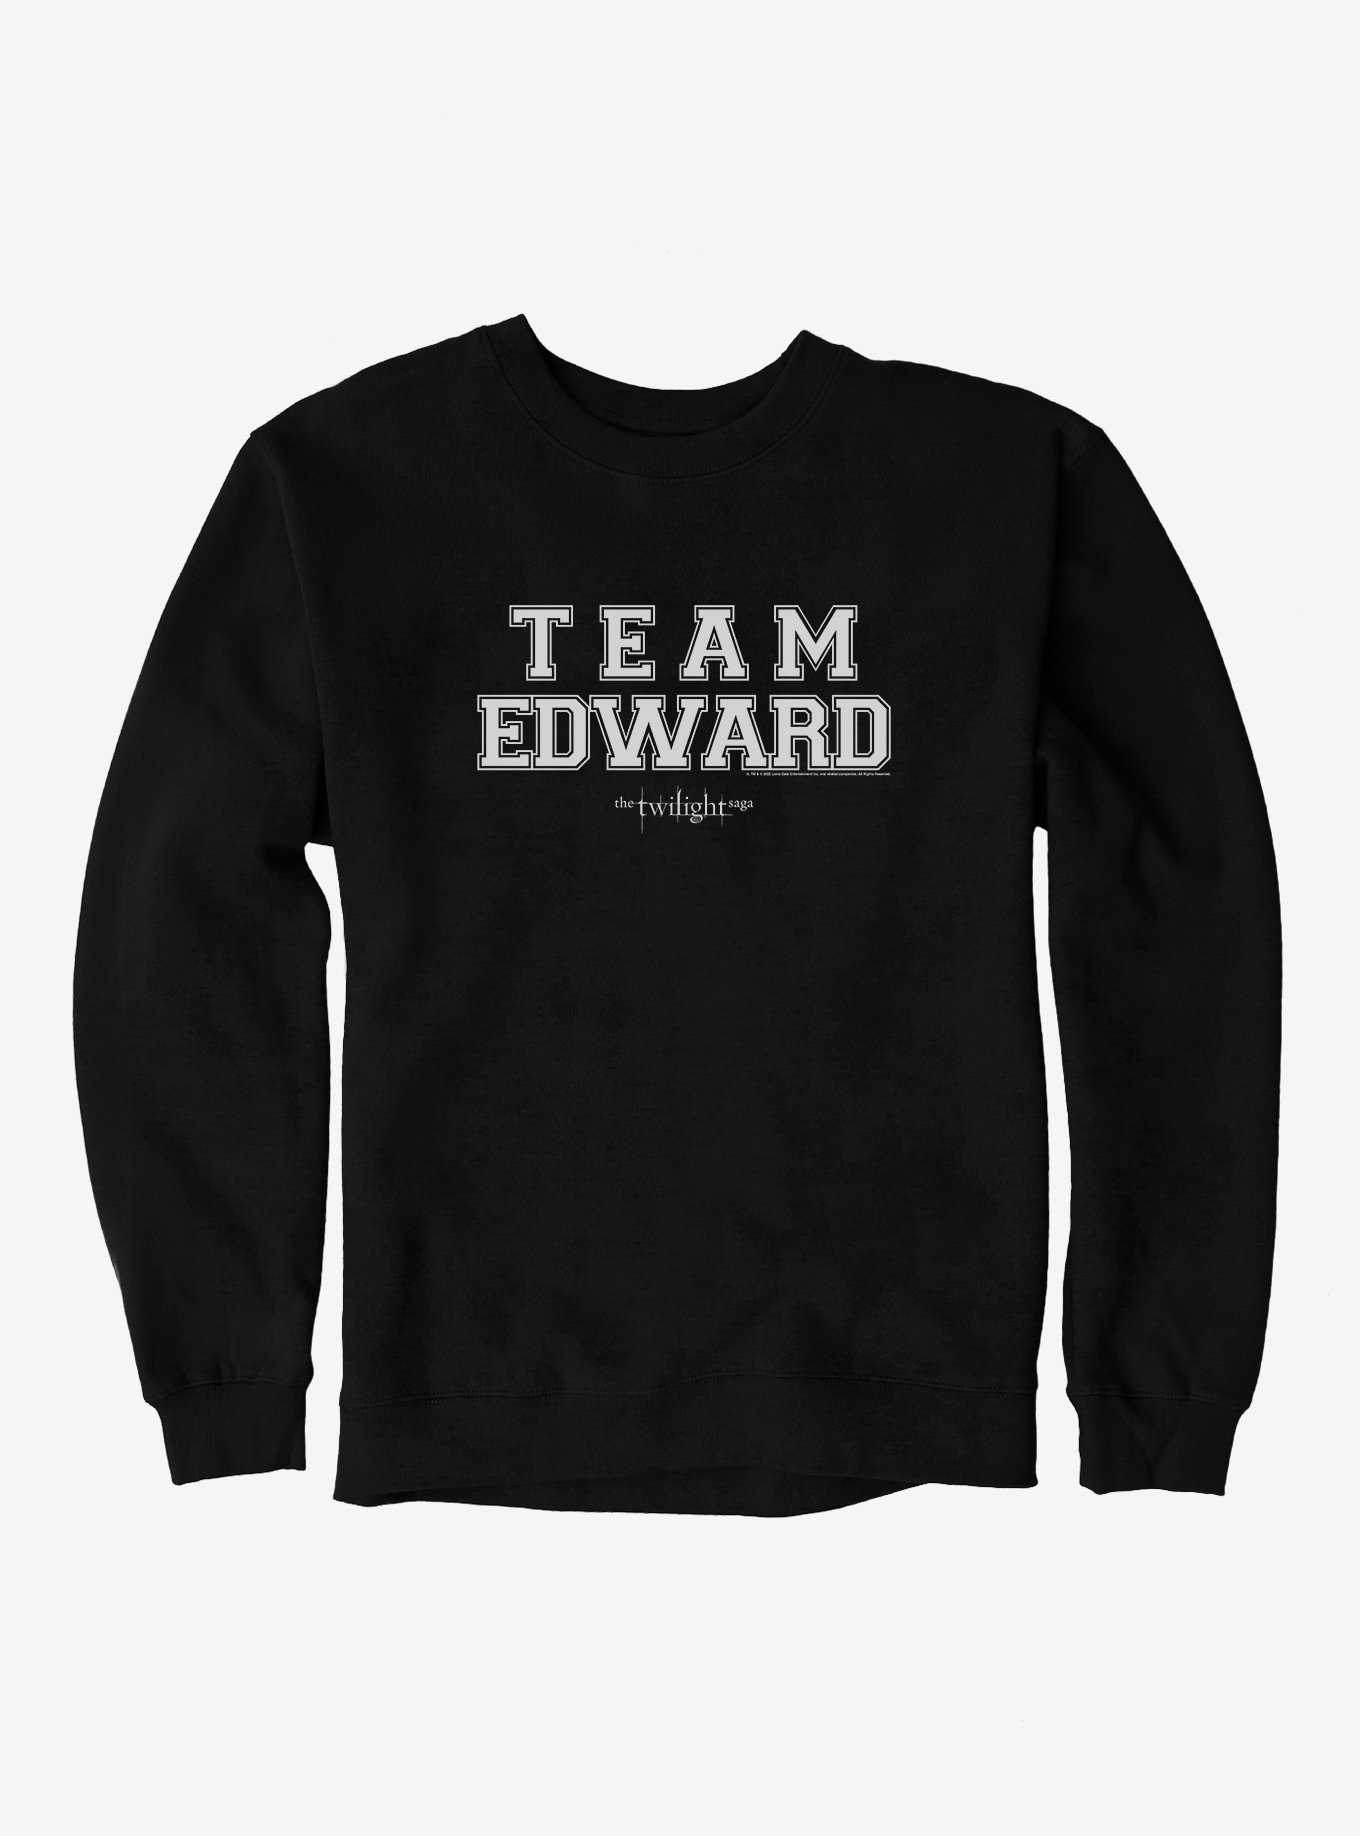 Team Jacob Twilight Cursed shirt, hoodie, sweater, longsleeve and